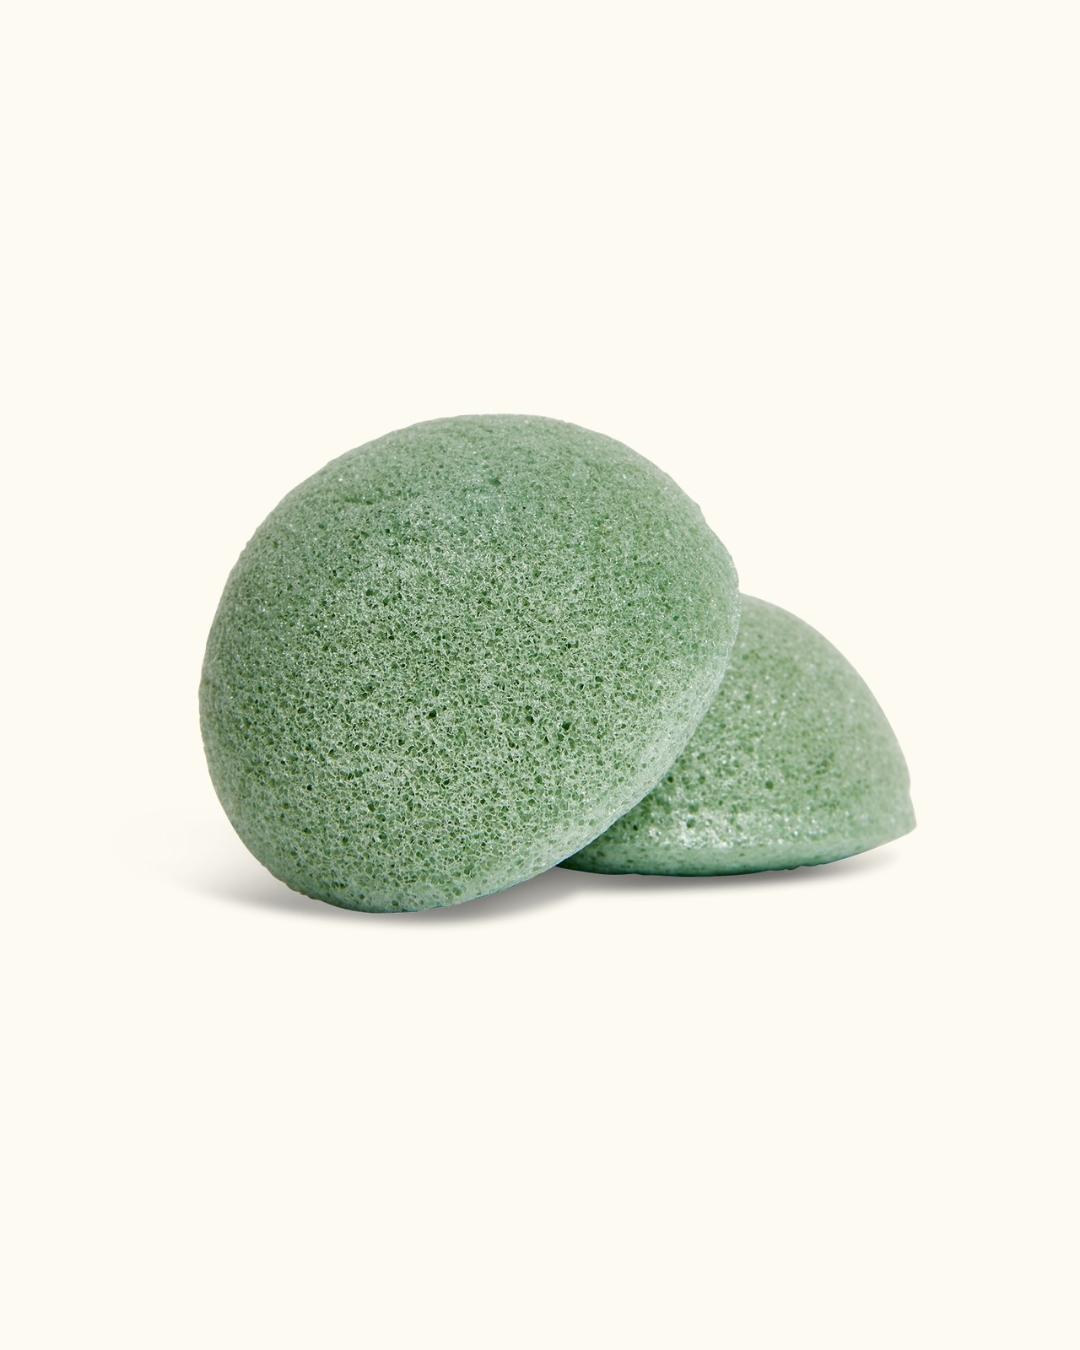 BLUEM Green Tea Konjac Sponge Biodegradable